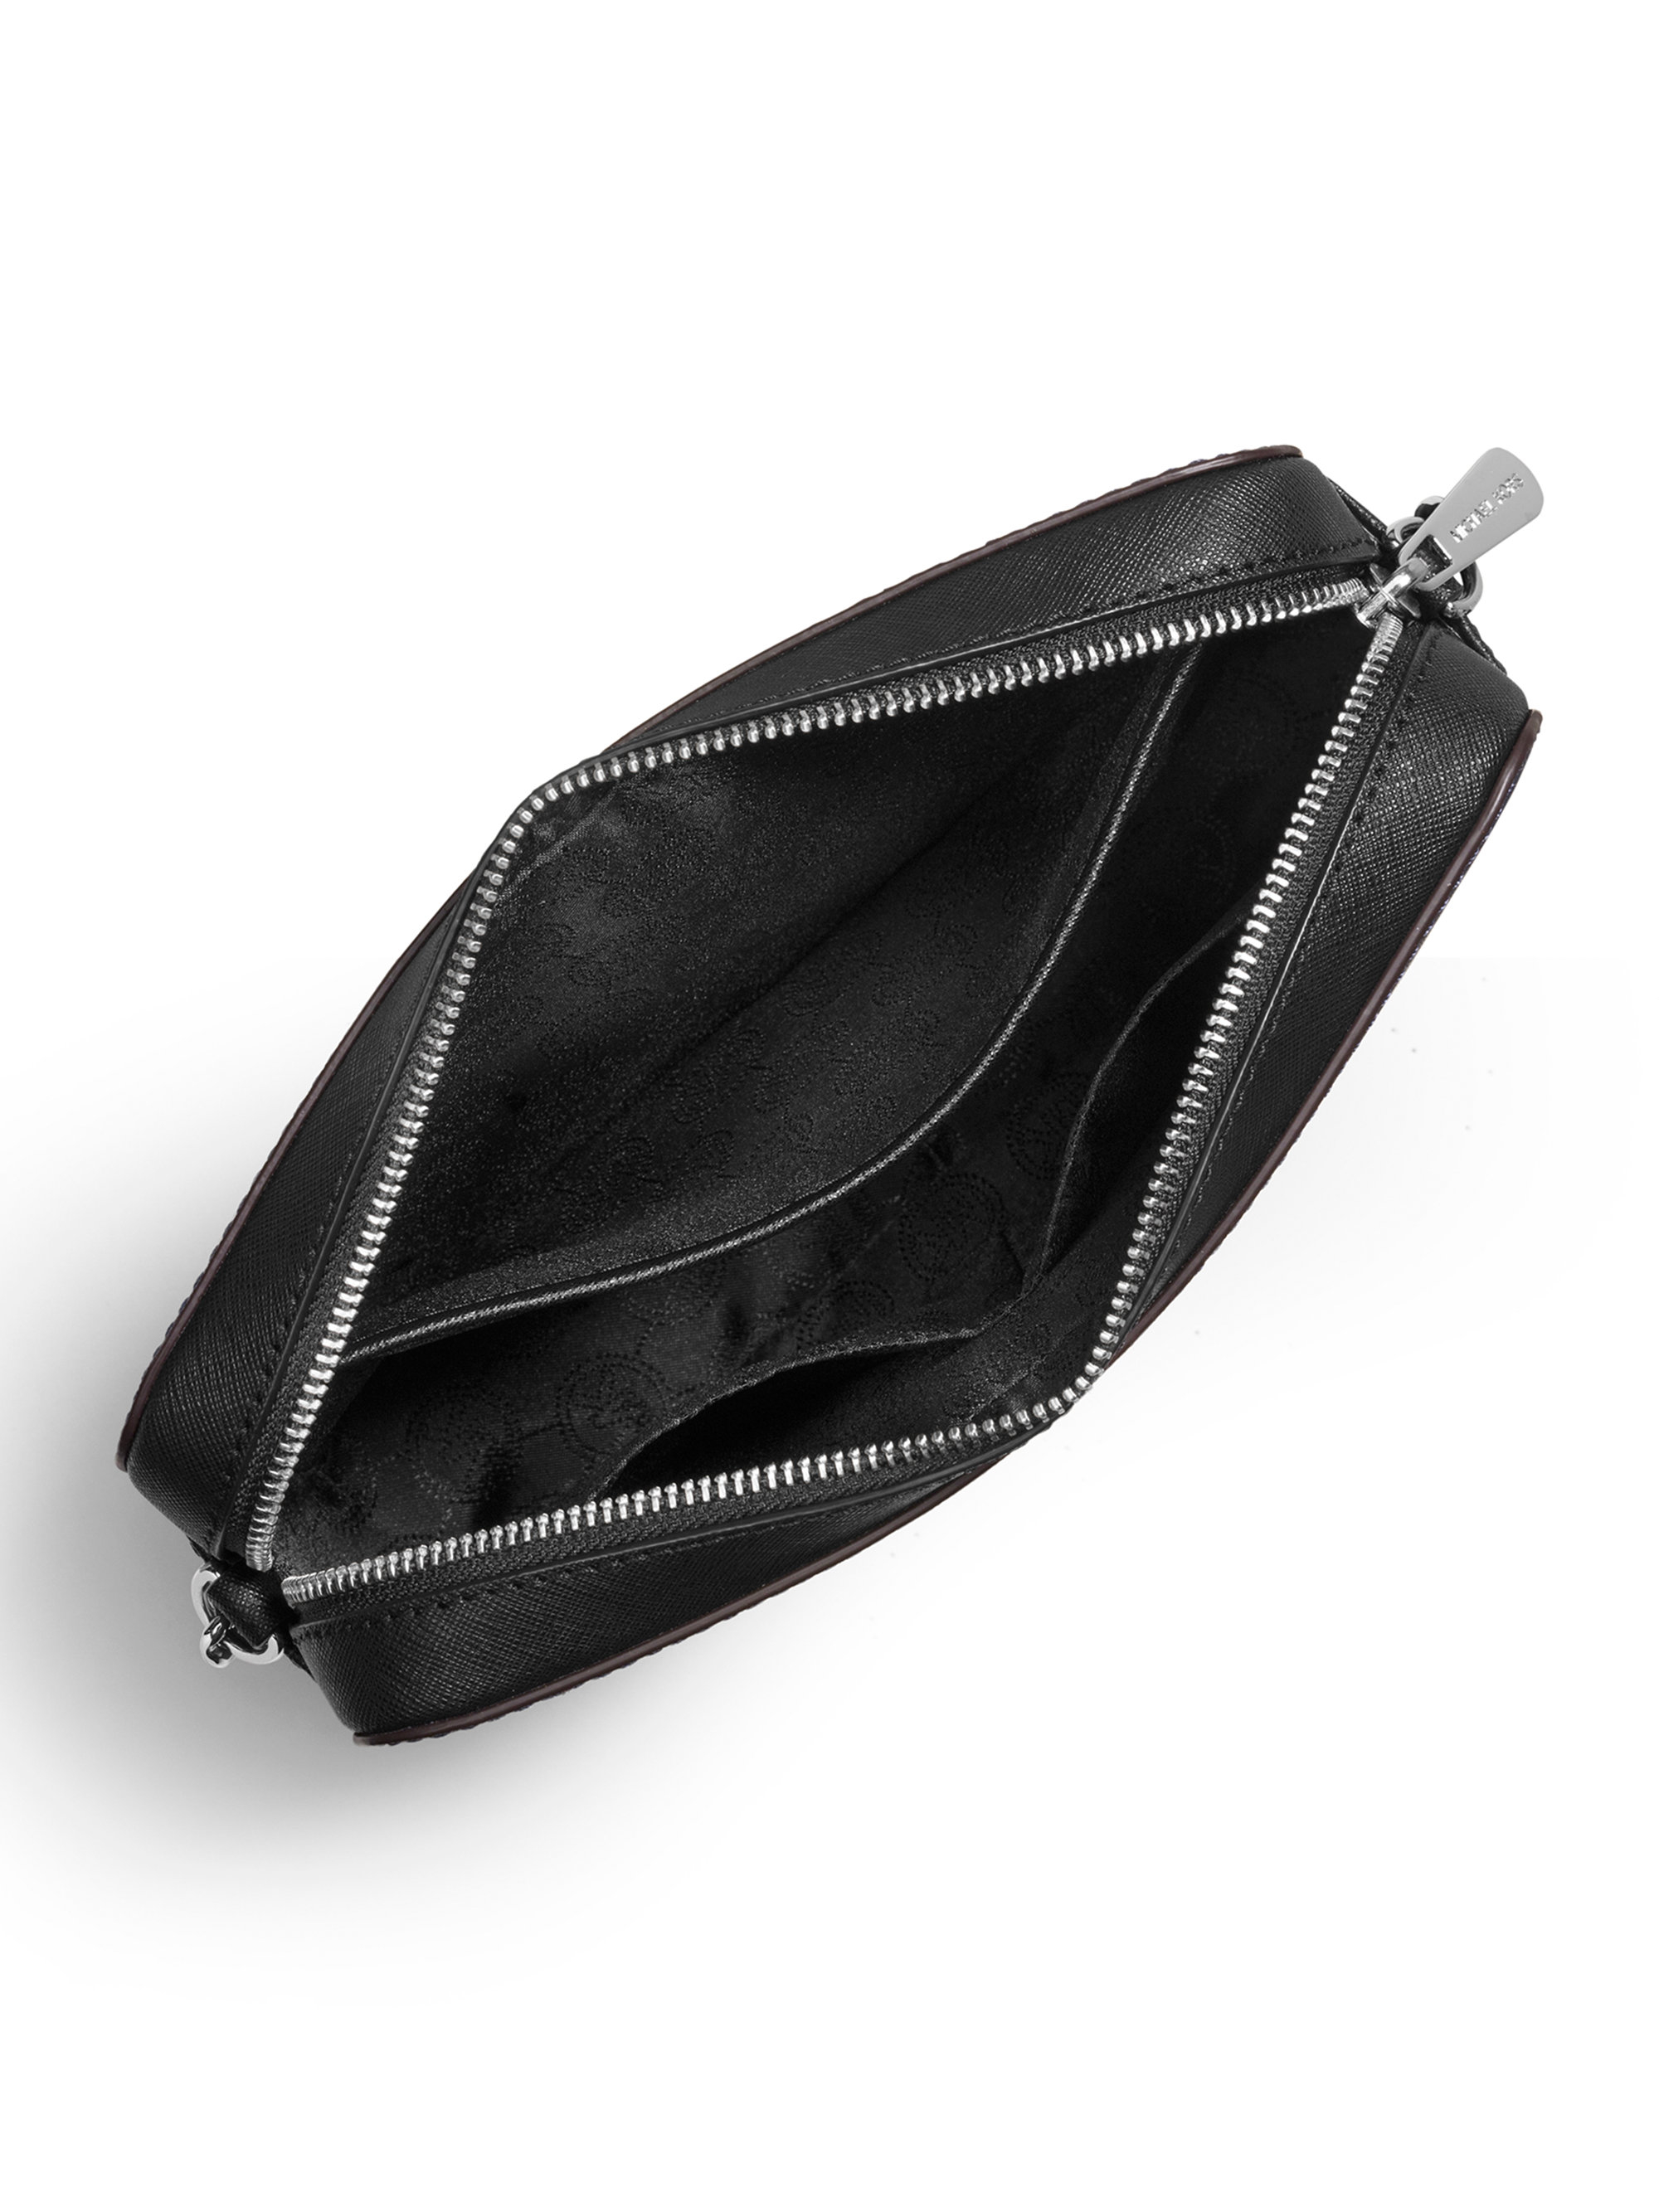 Lyst - Michael Michael Kors Jet Set Travel Saffiano-Leather Cross-Body Bag in Black